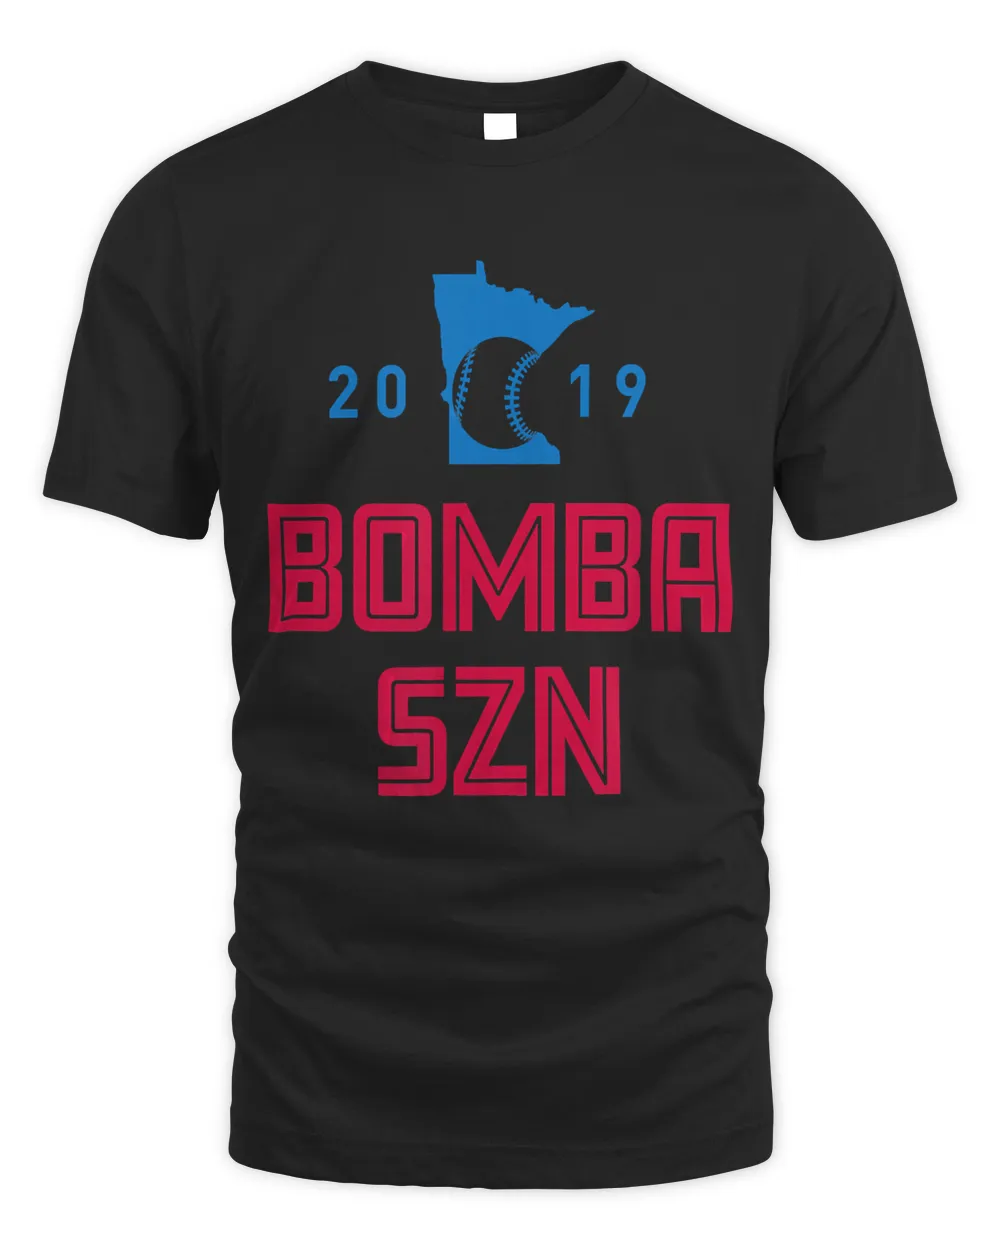 BOMBA SZN Bomb Squad Funny Baseball Gift Tee T-Shirt